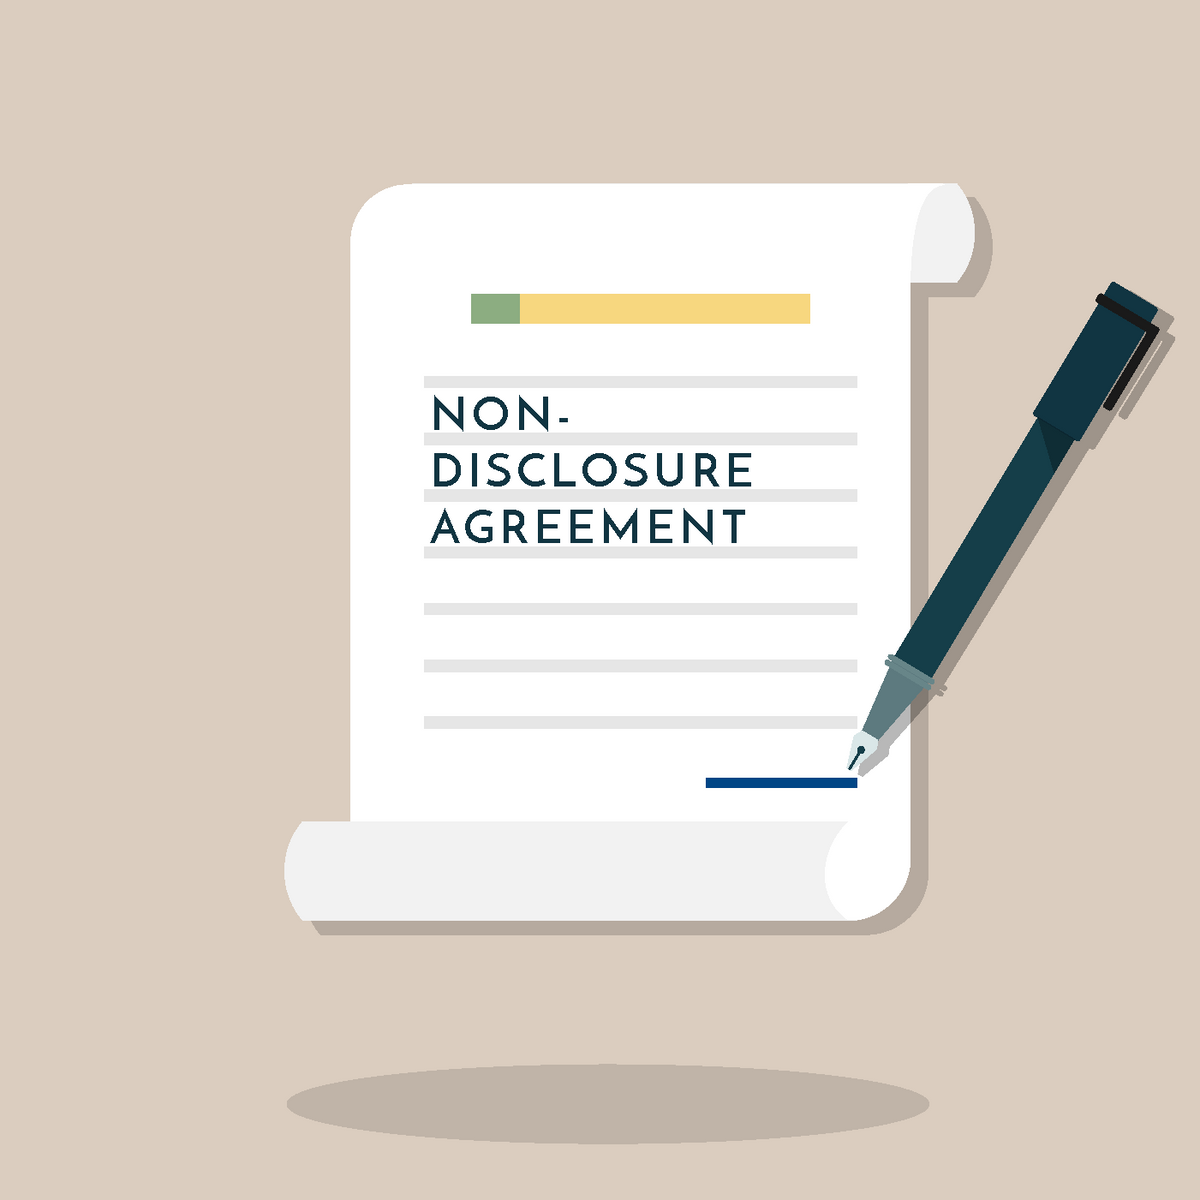 Non-Disclosure Agreement (NDA)